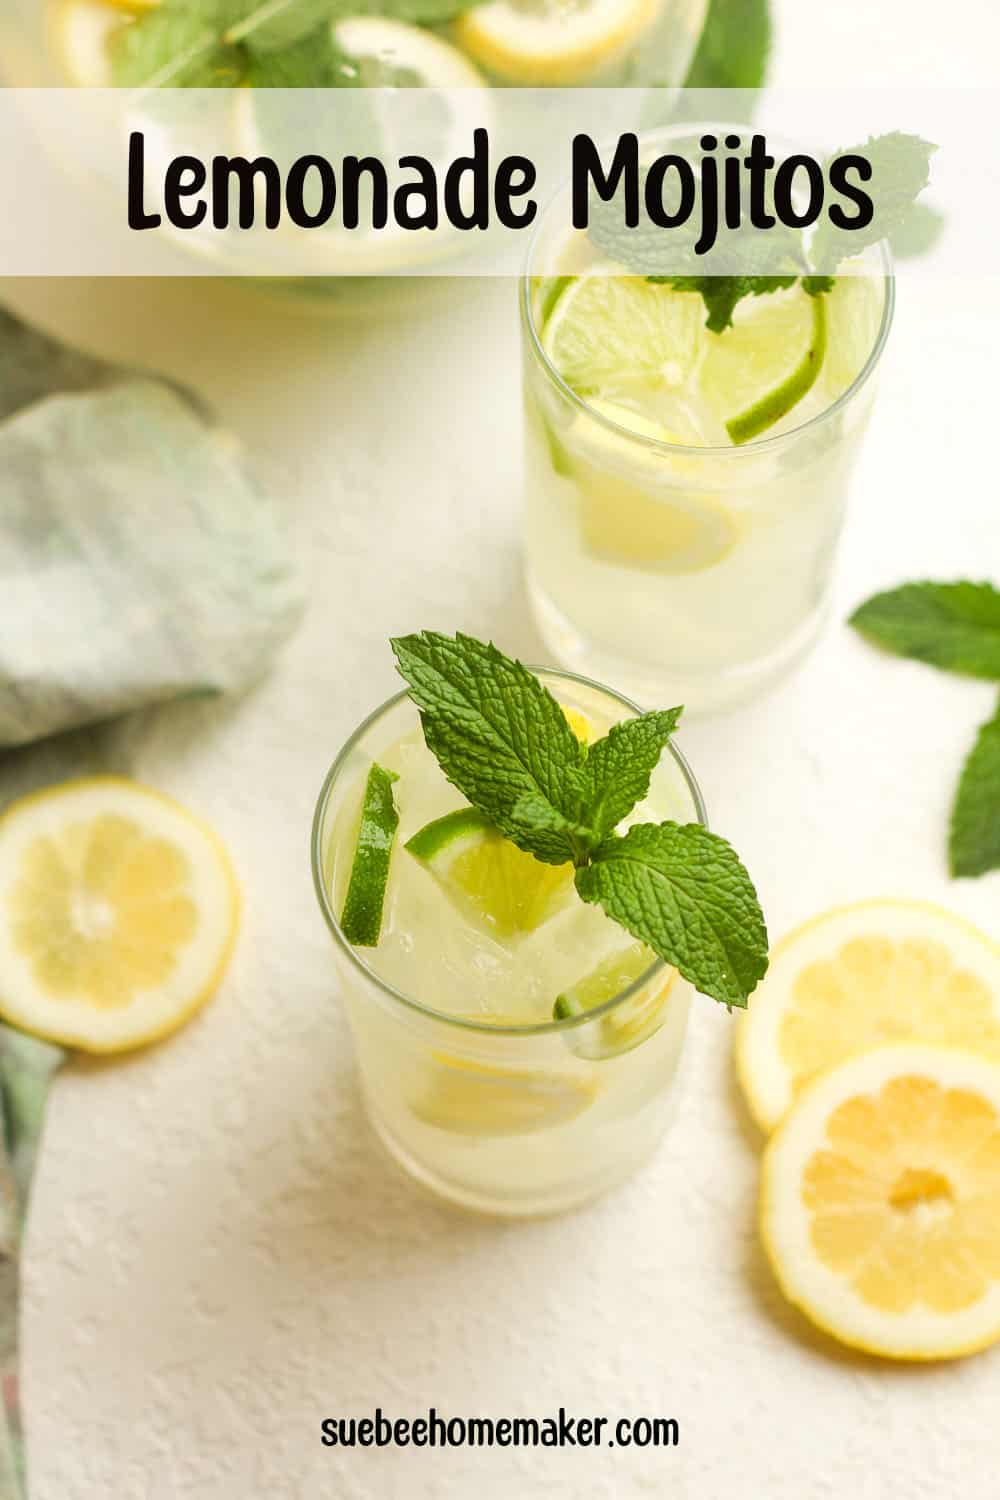 An overhead shot of two glasses of lemonade mojitos.